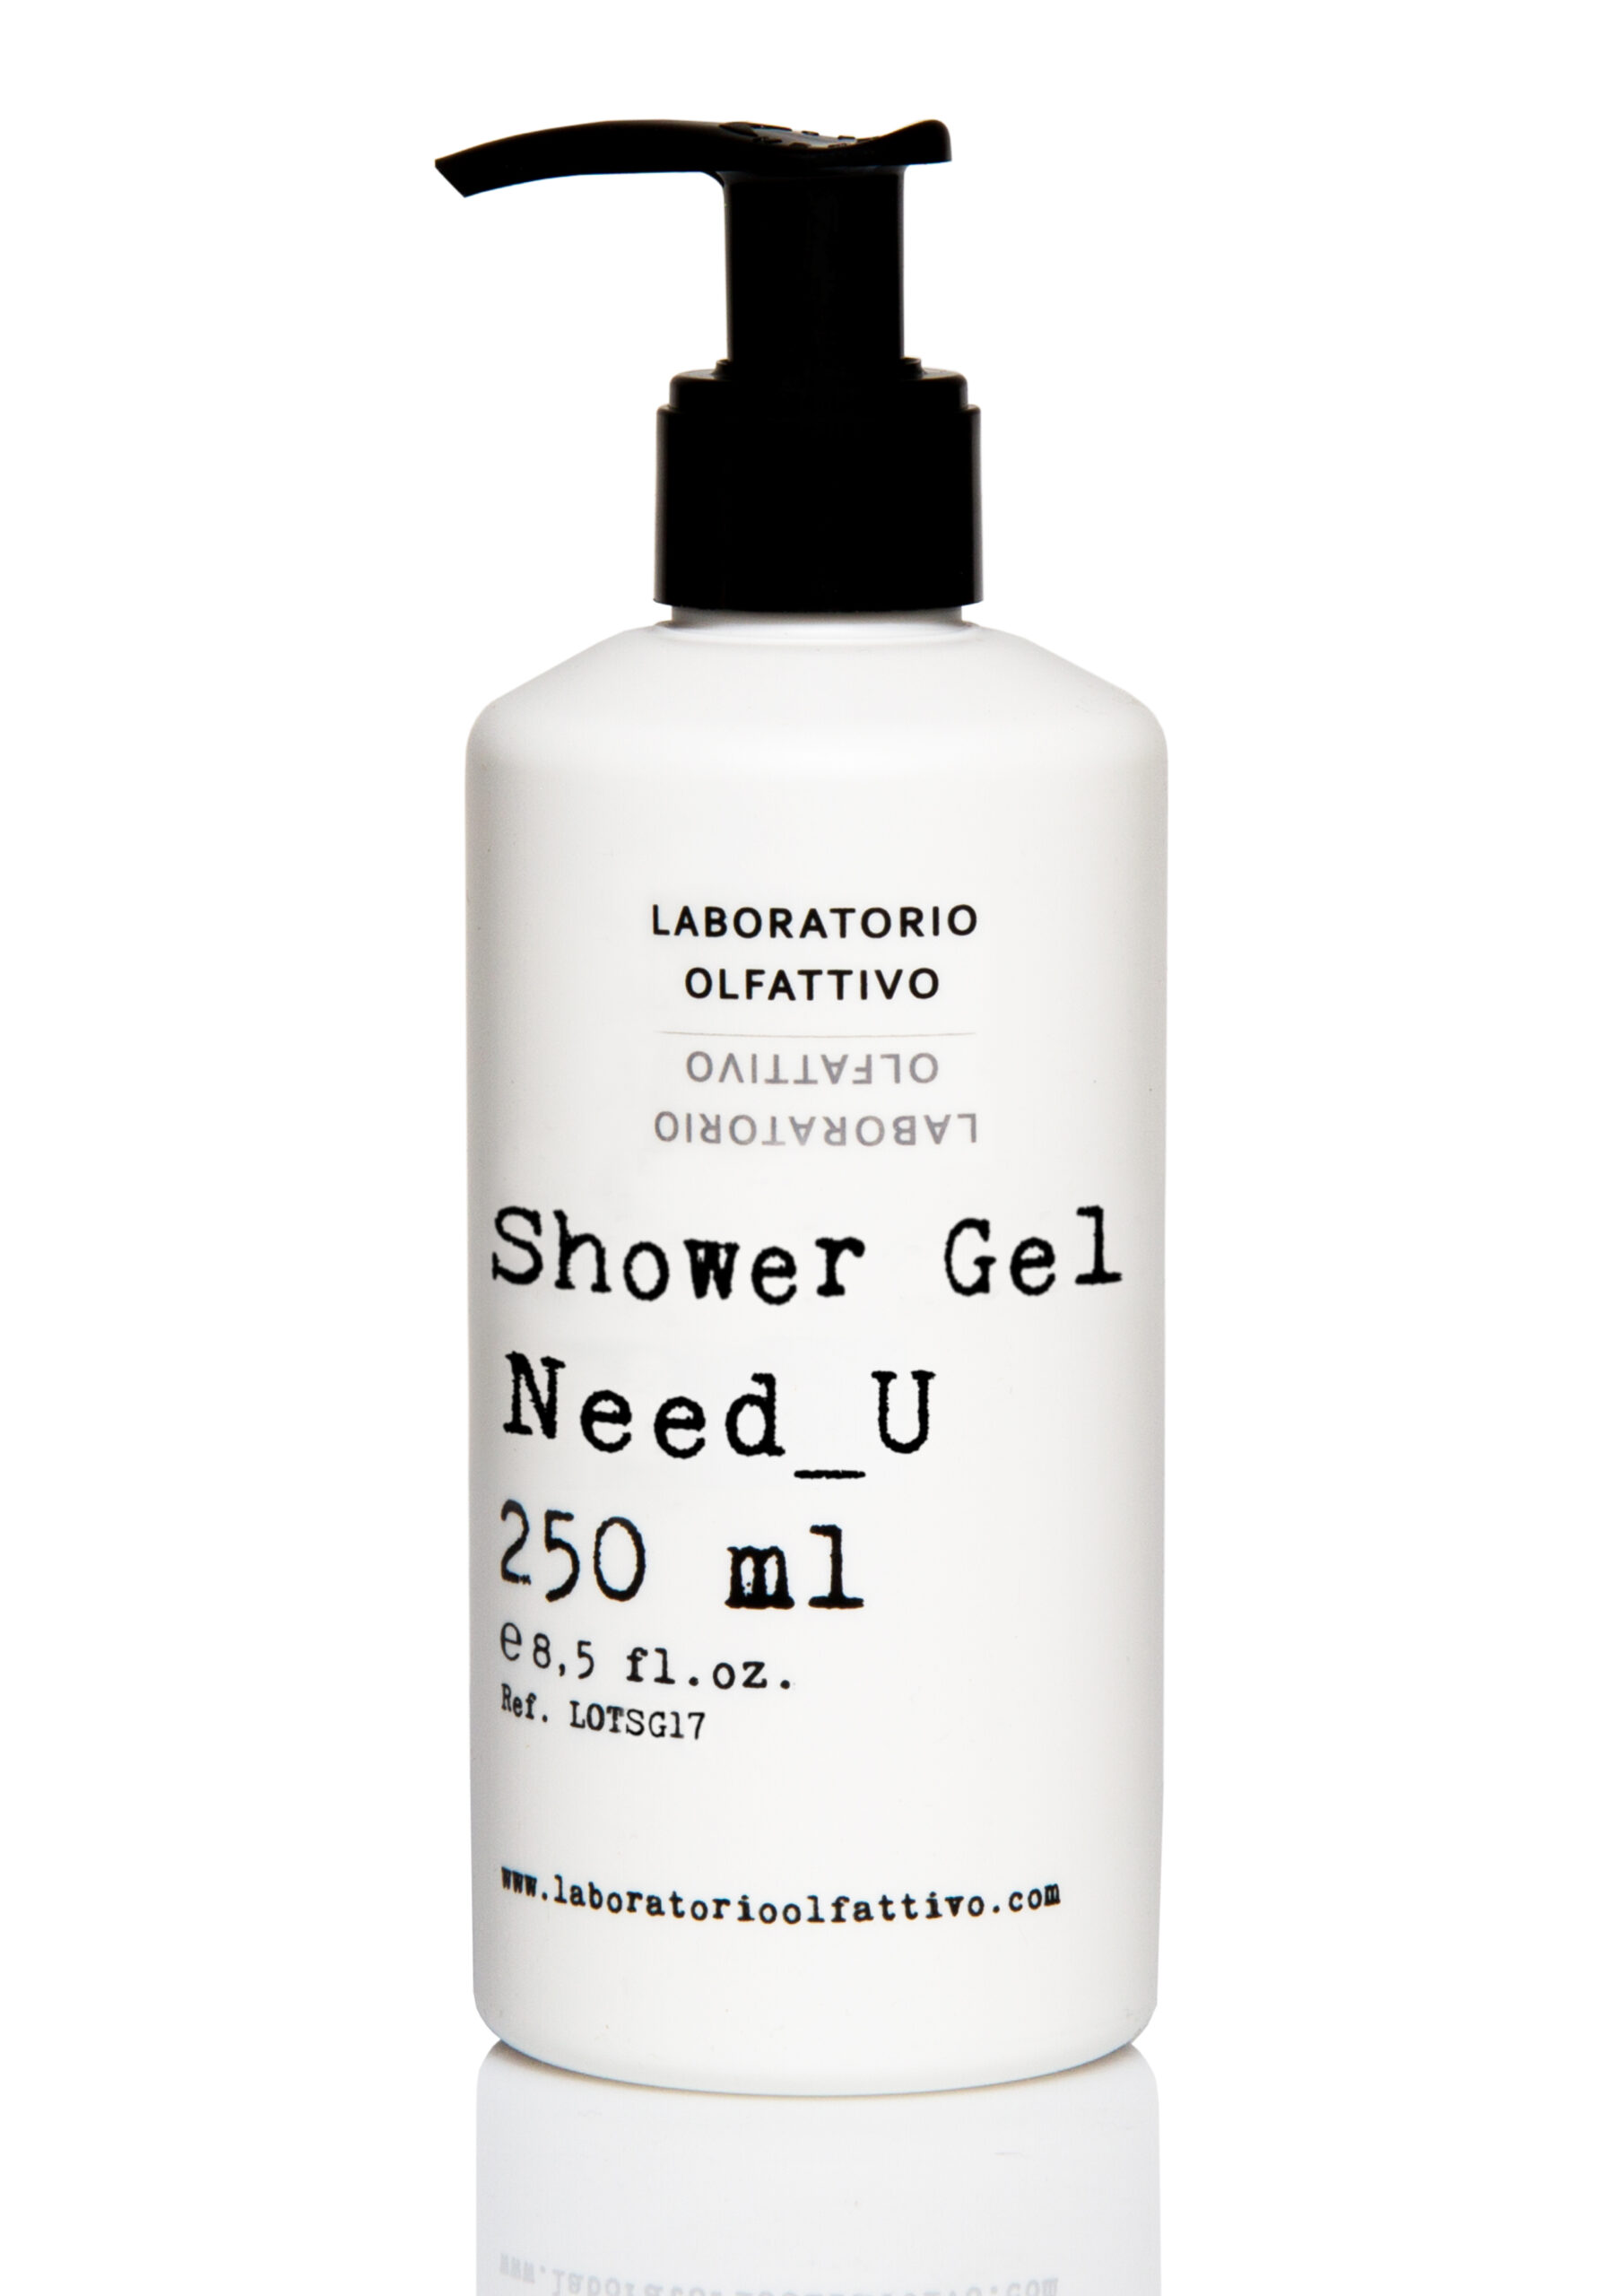 https://www.laboratorioolfattivo.com/wp-content/uploads/2023/03/Shower-gel-Need-U-scaled.jpg